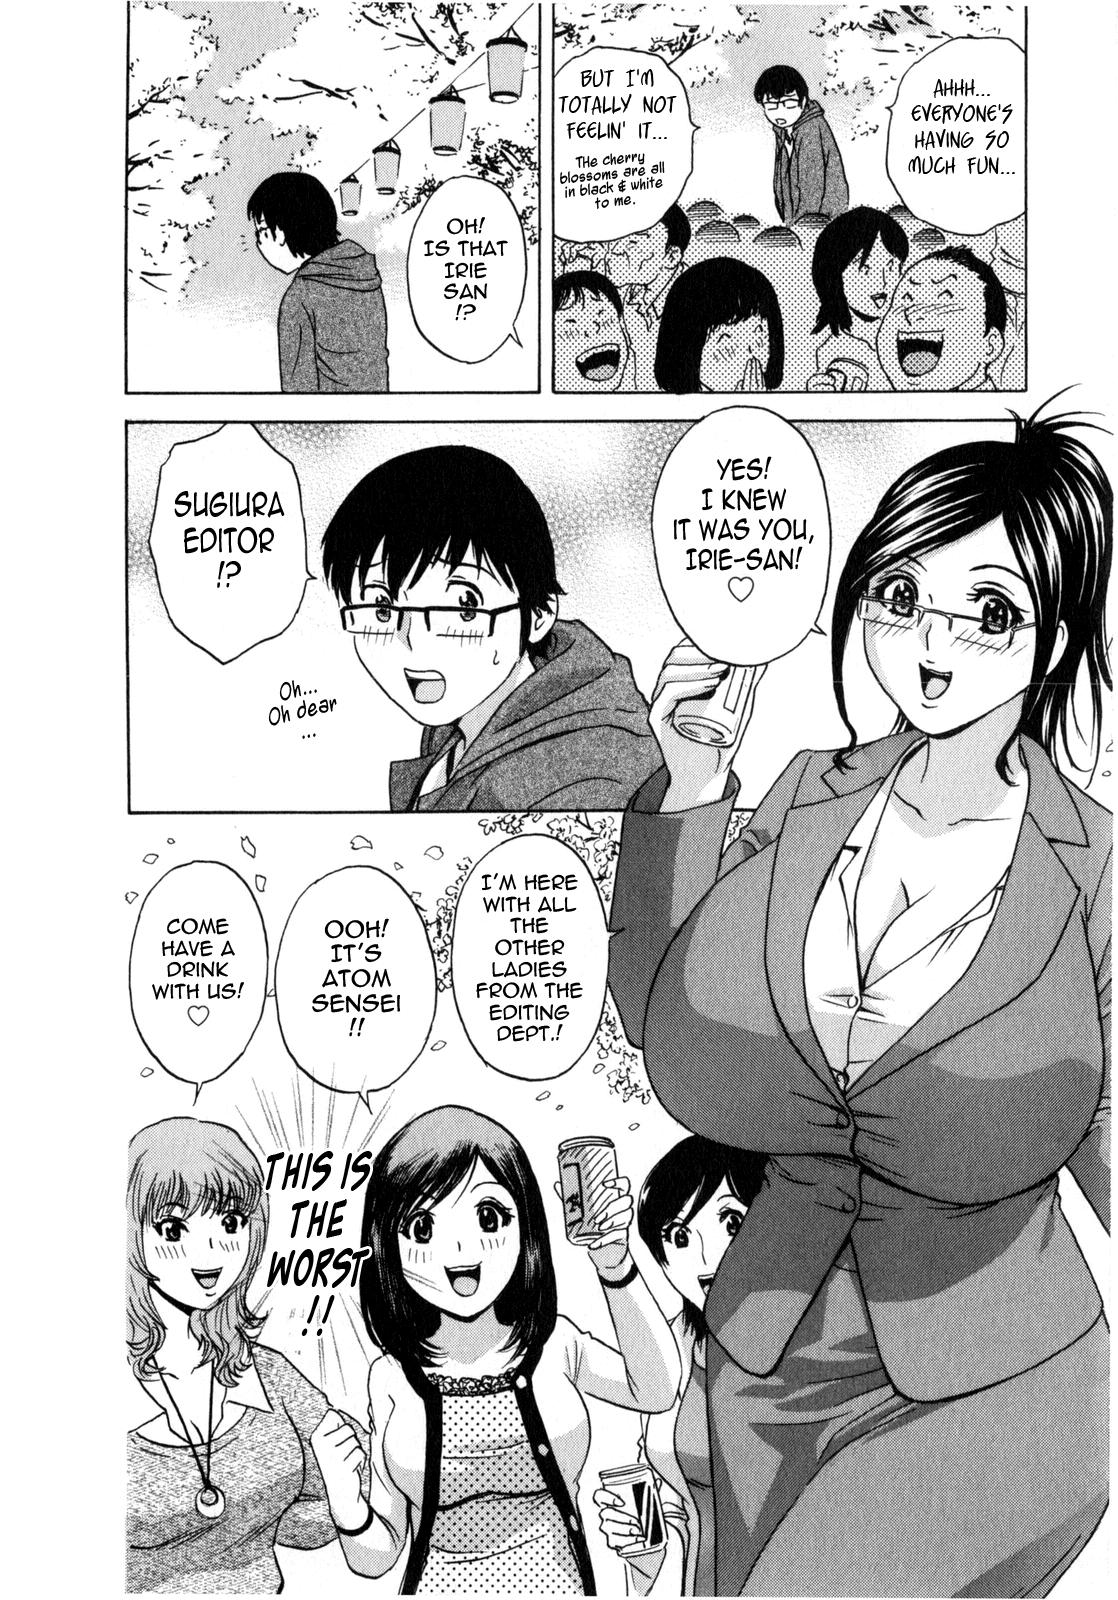 [Hidemaru] Life with Married Women Just Like a Manga 2 - Ch. 1-4 [English] {Tadanohito} 72